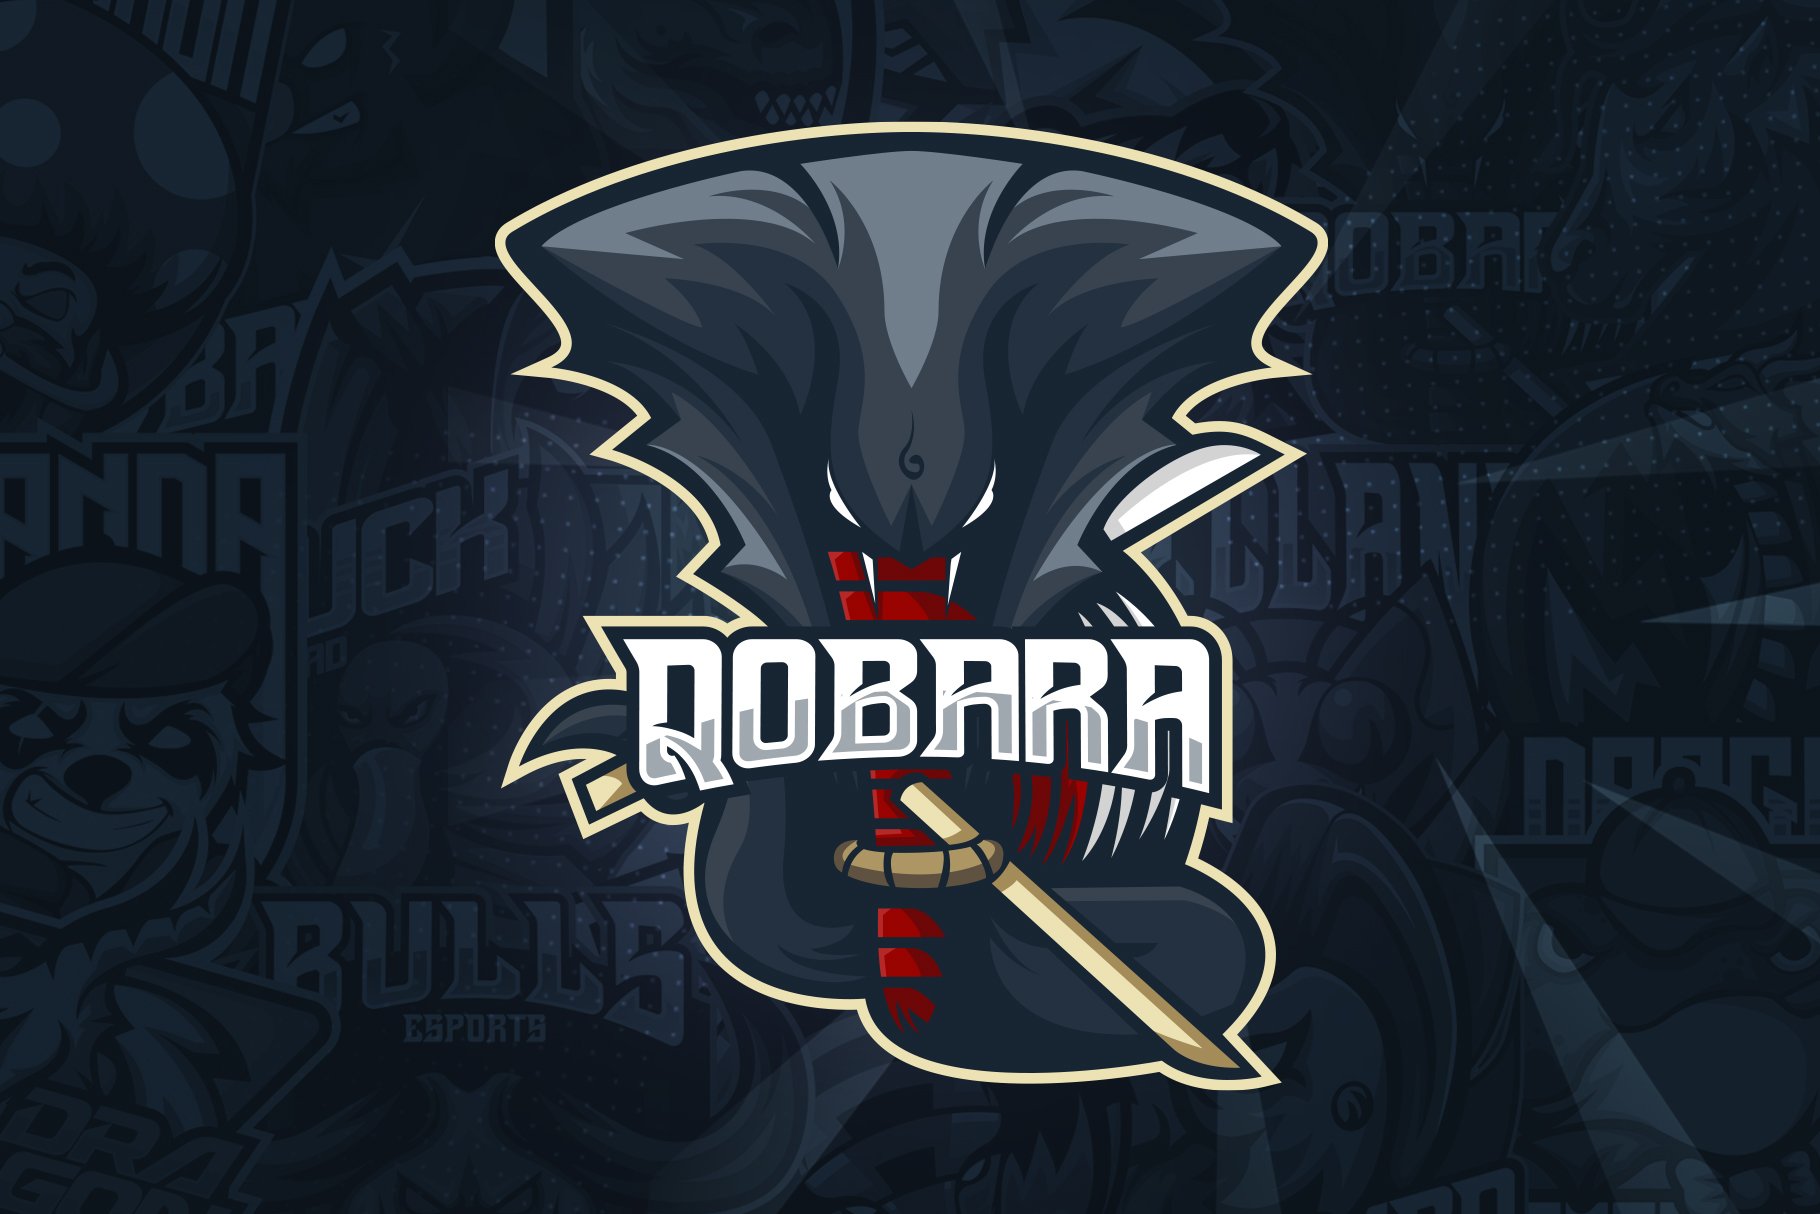 Qobara Esport Mascot Logo preview image.